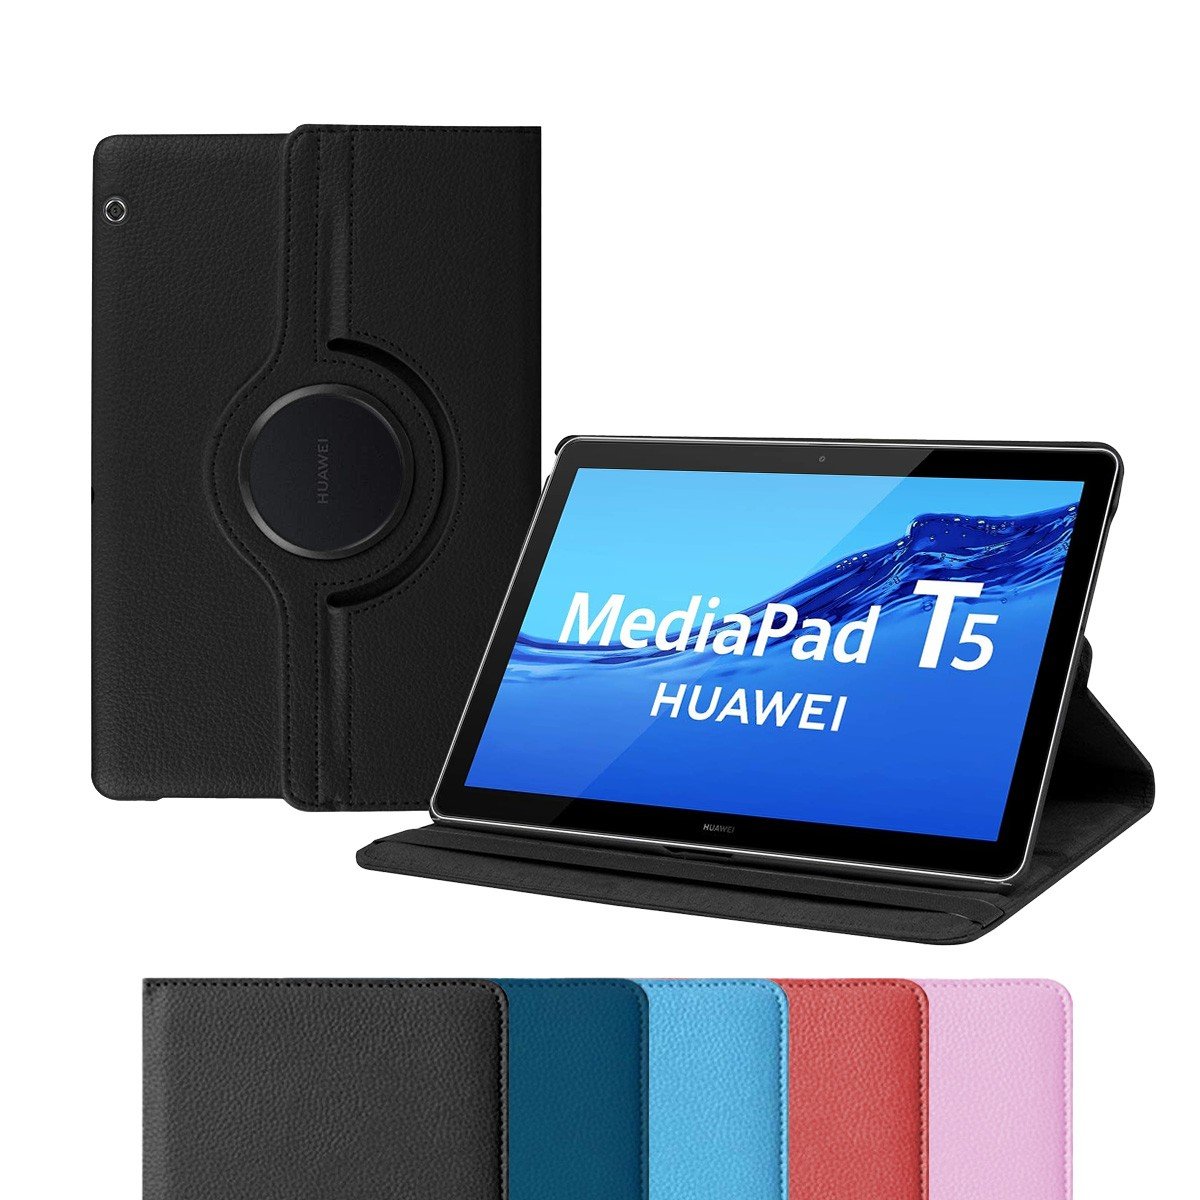 Funda Tablet Rotativa Xiaomi Redmi Pad SE 2023 - 5 Colores